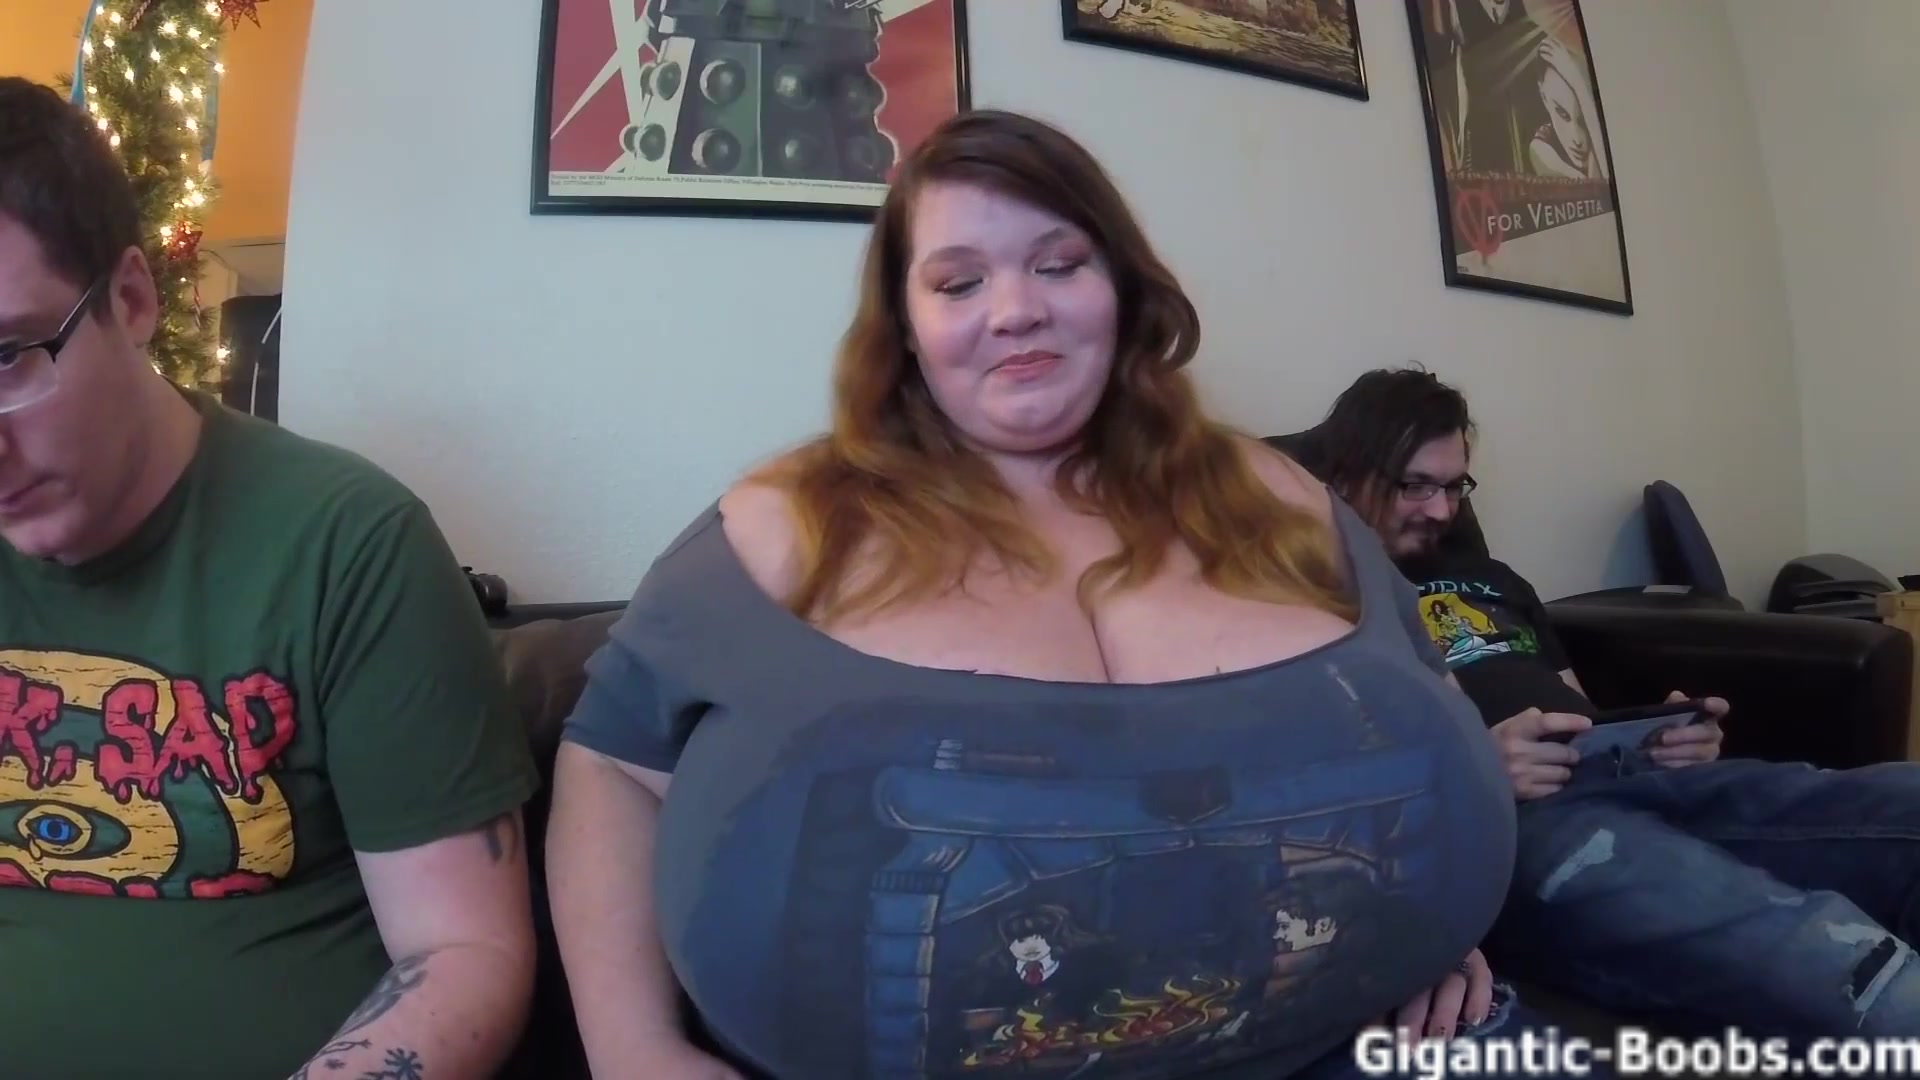 Look at this gigantic tits